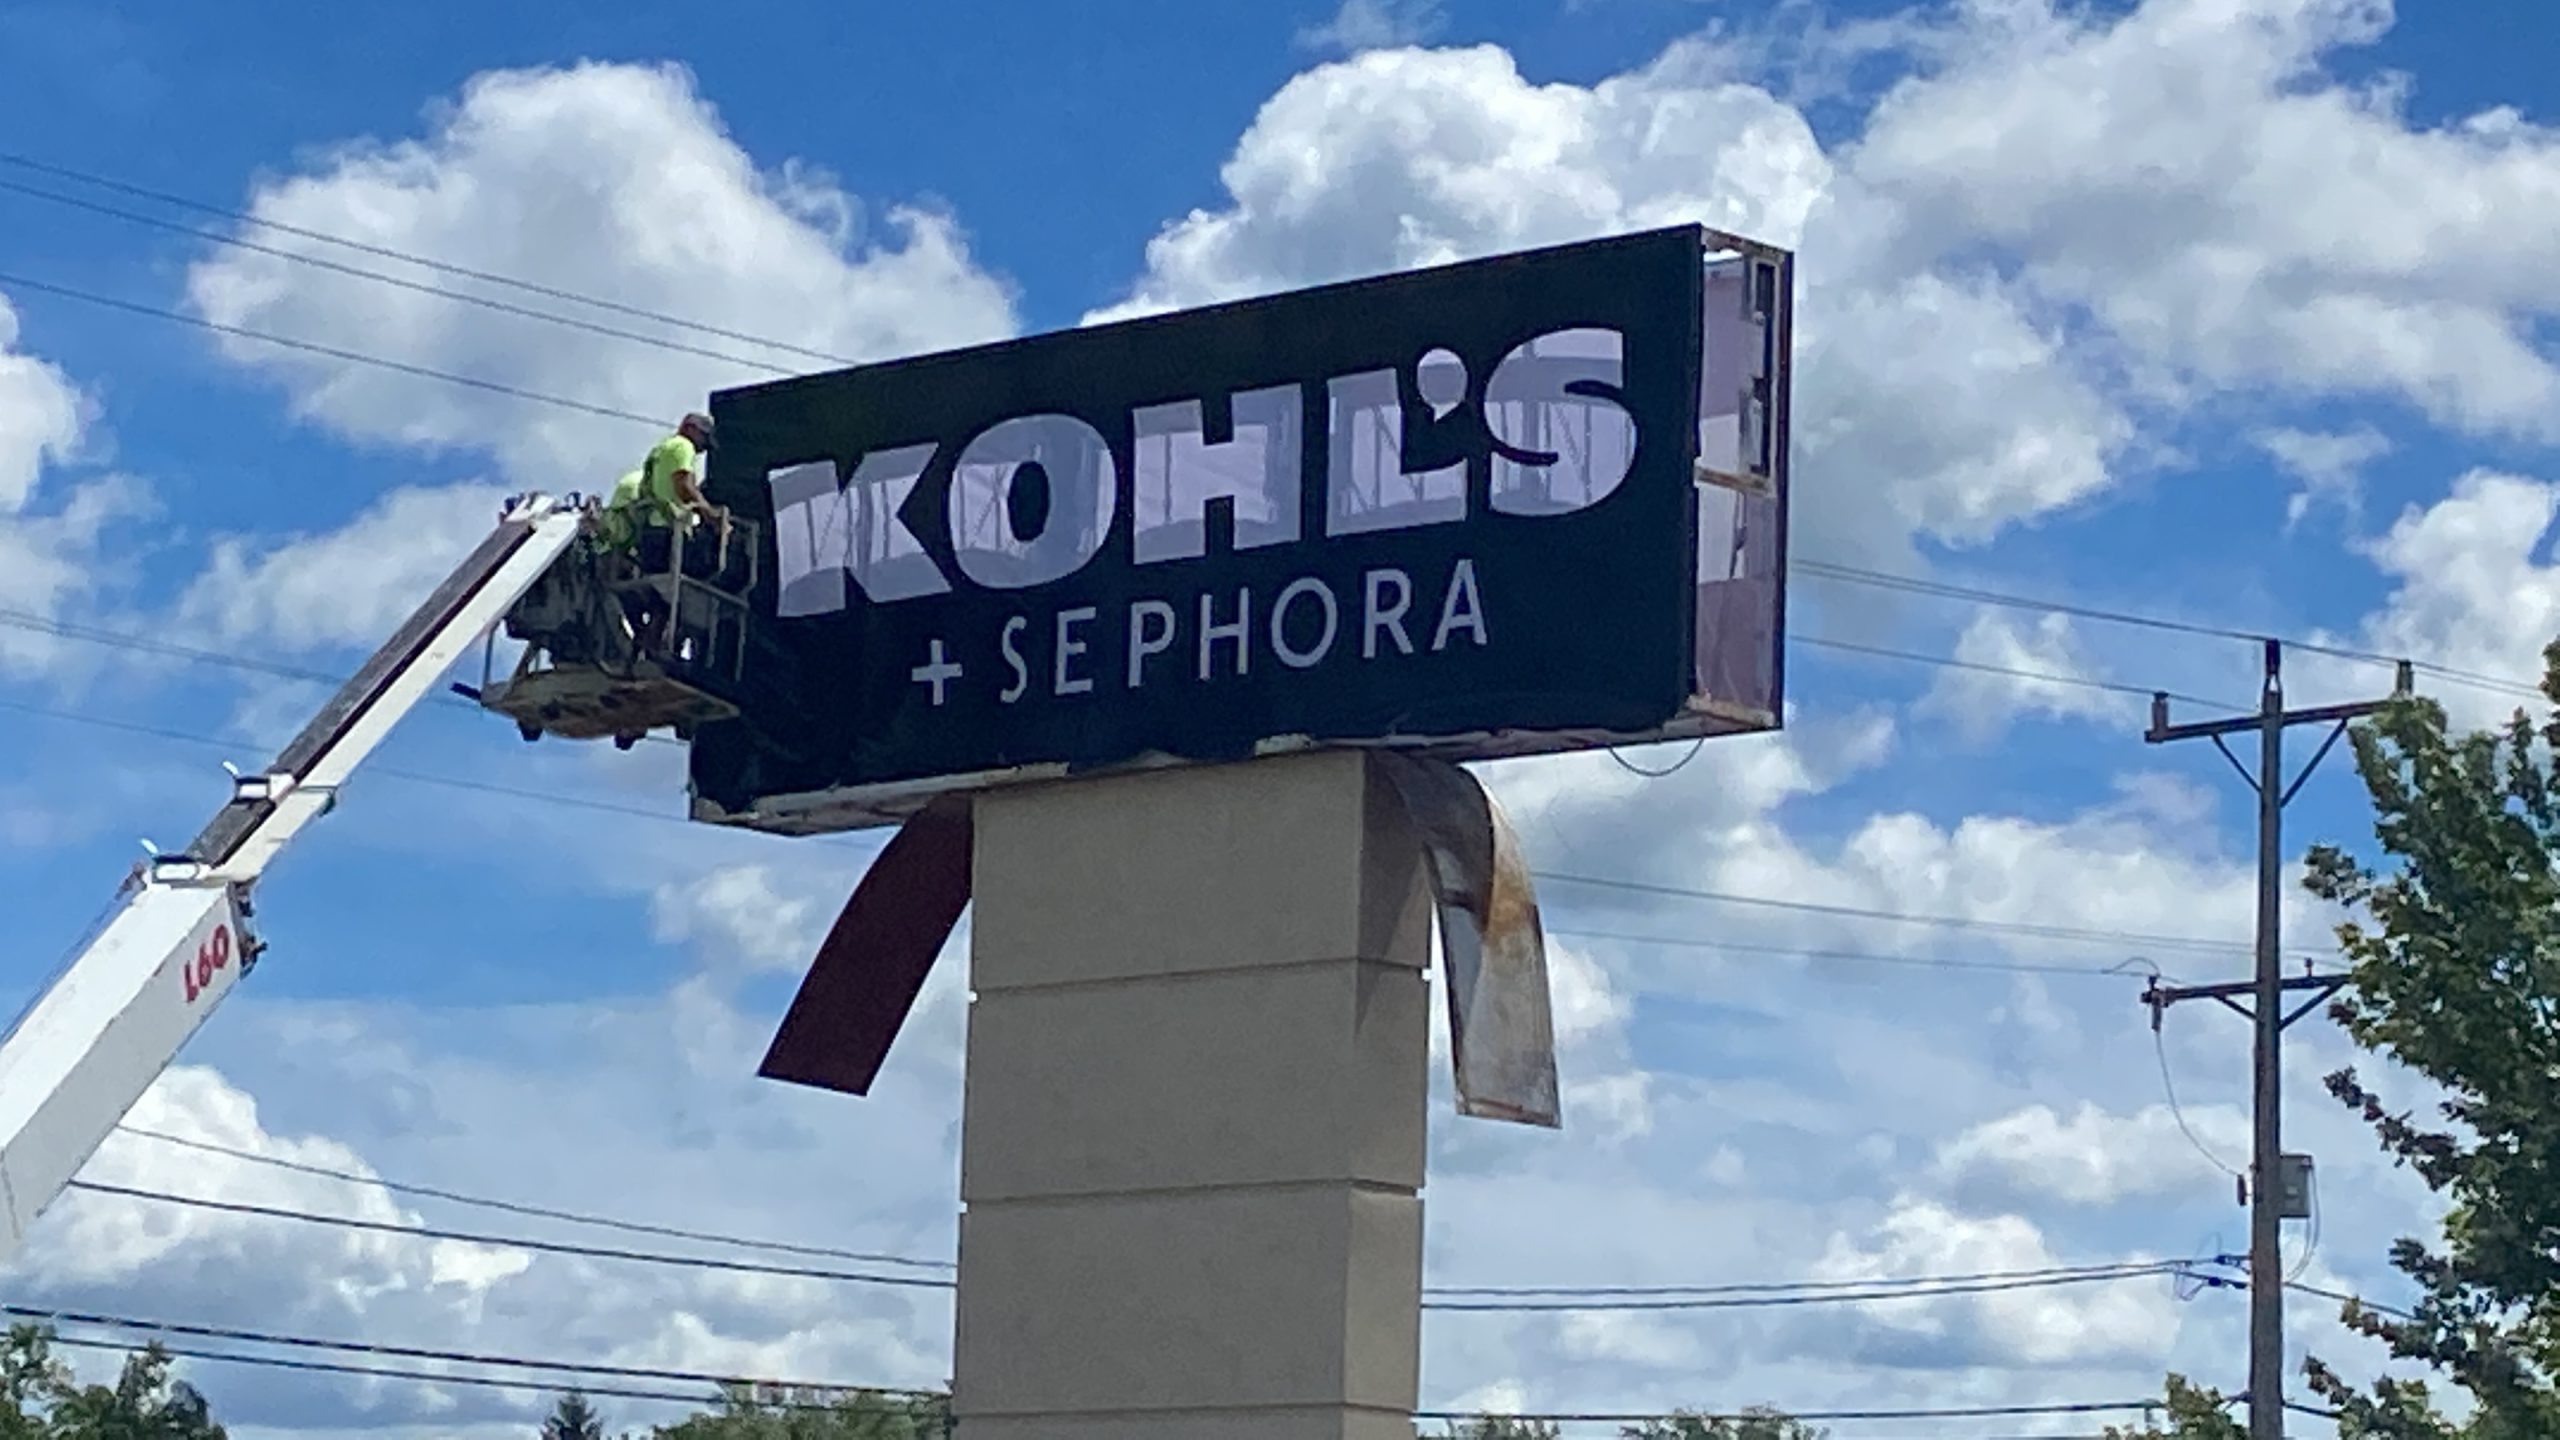 Kohl's Sephora